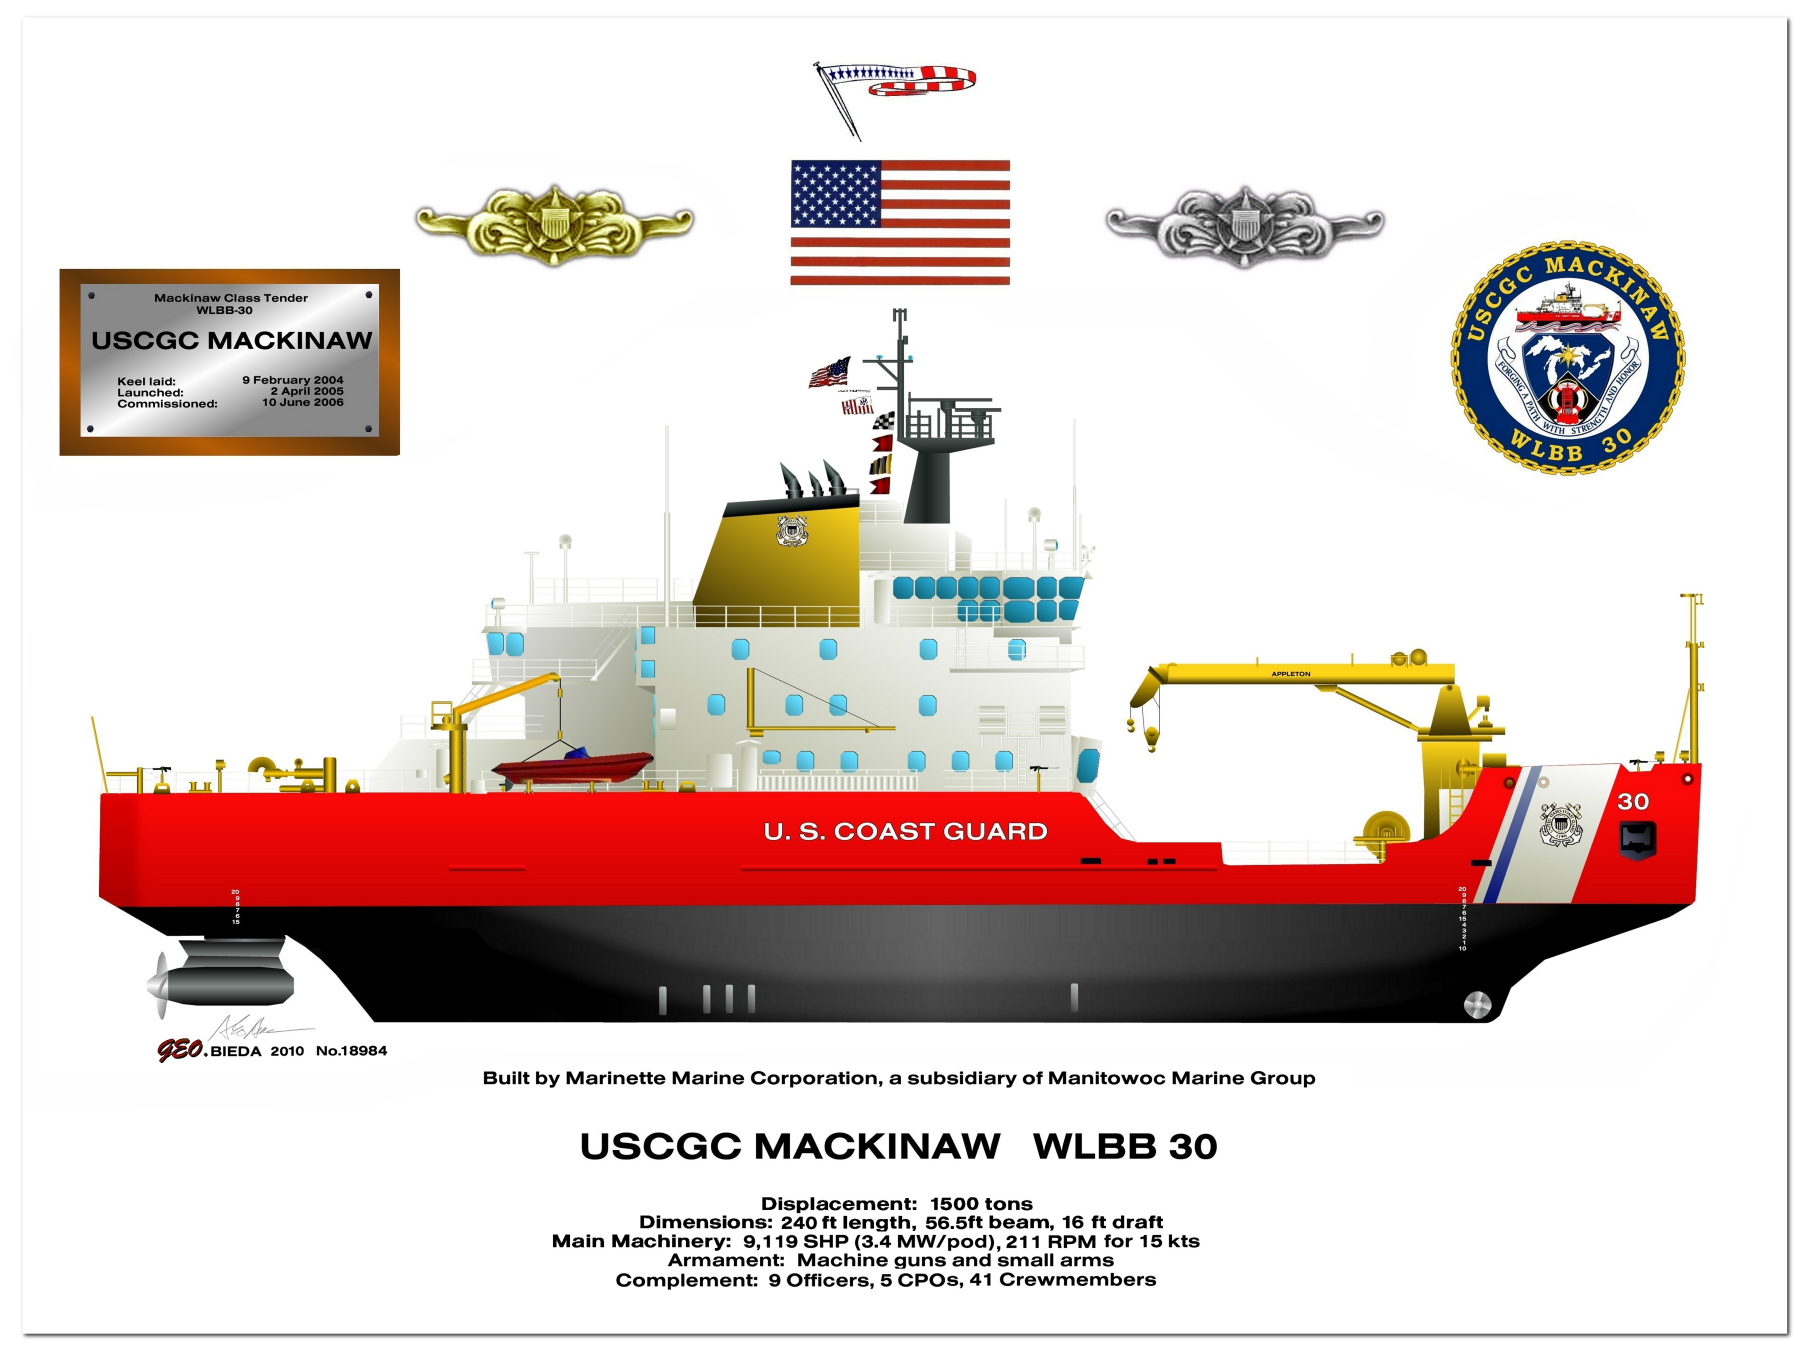 USCGC Mackinaw WLBB 30, Great Lakes Icebreaker